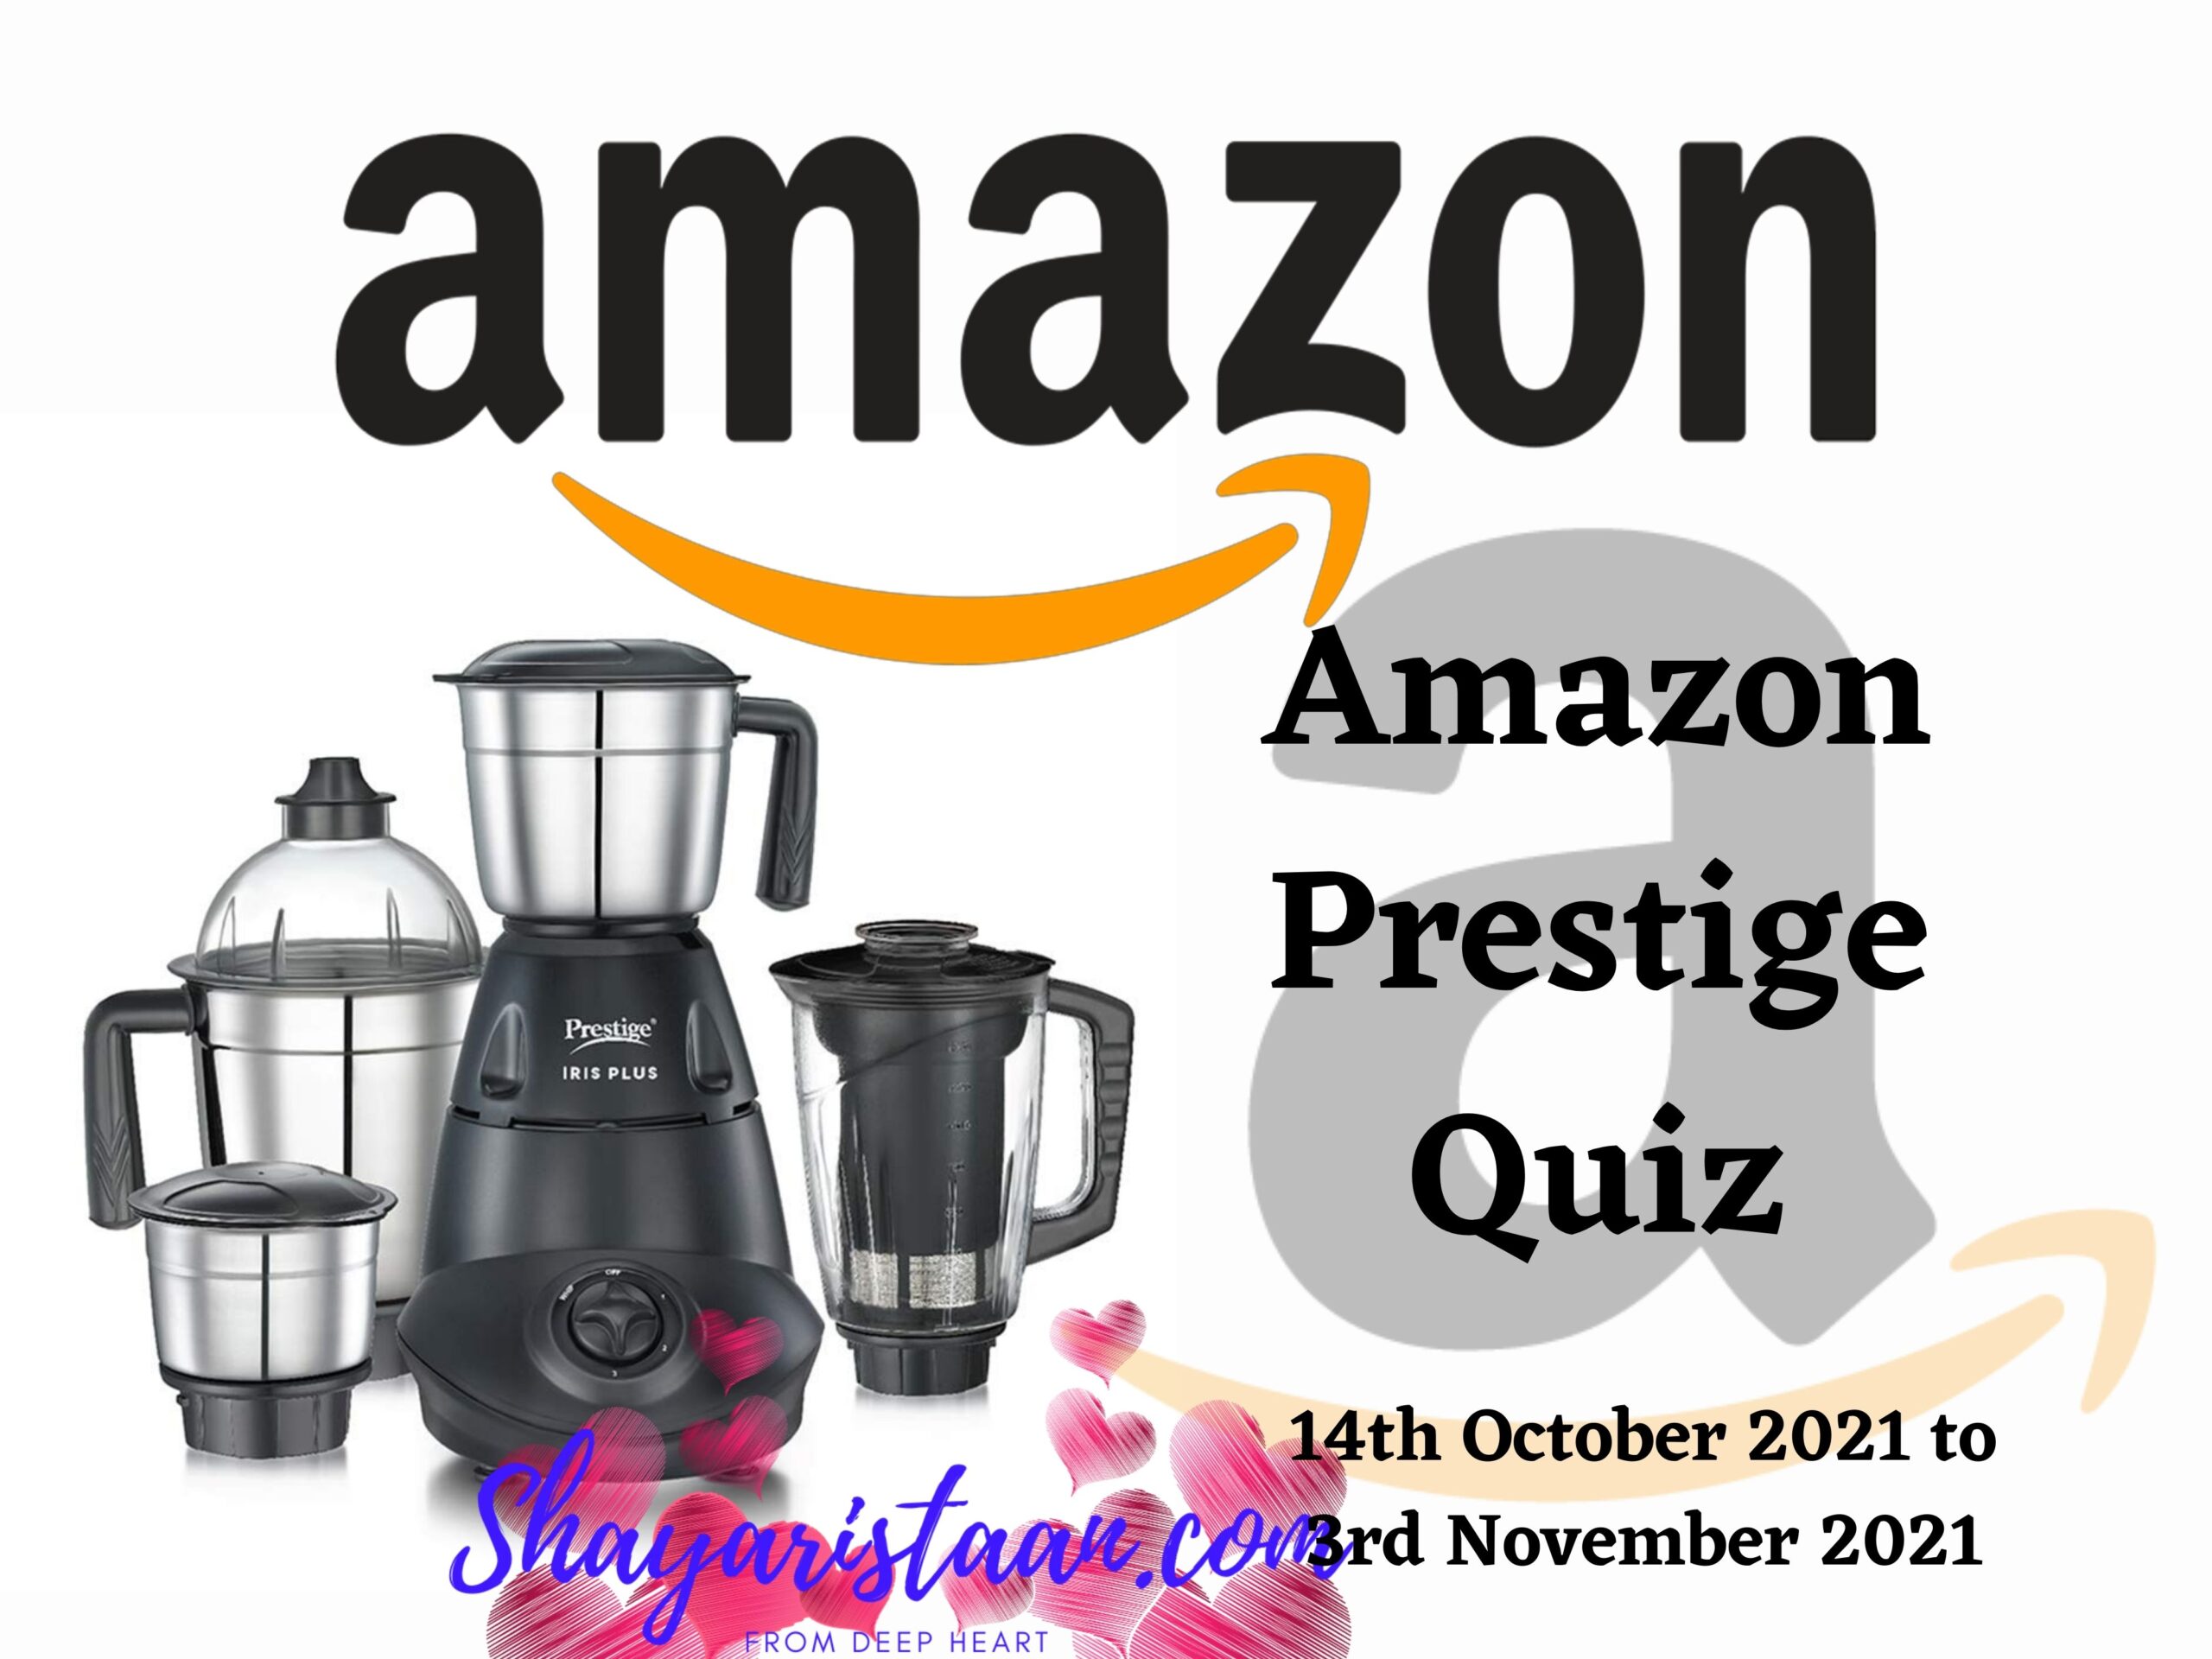 Amazon Prestige Quiz